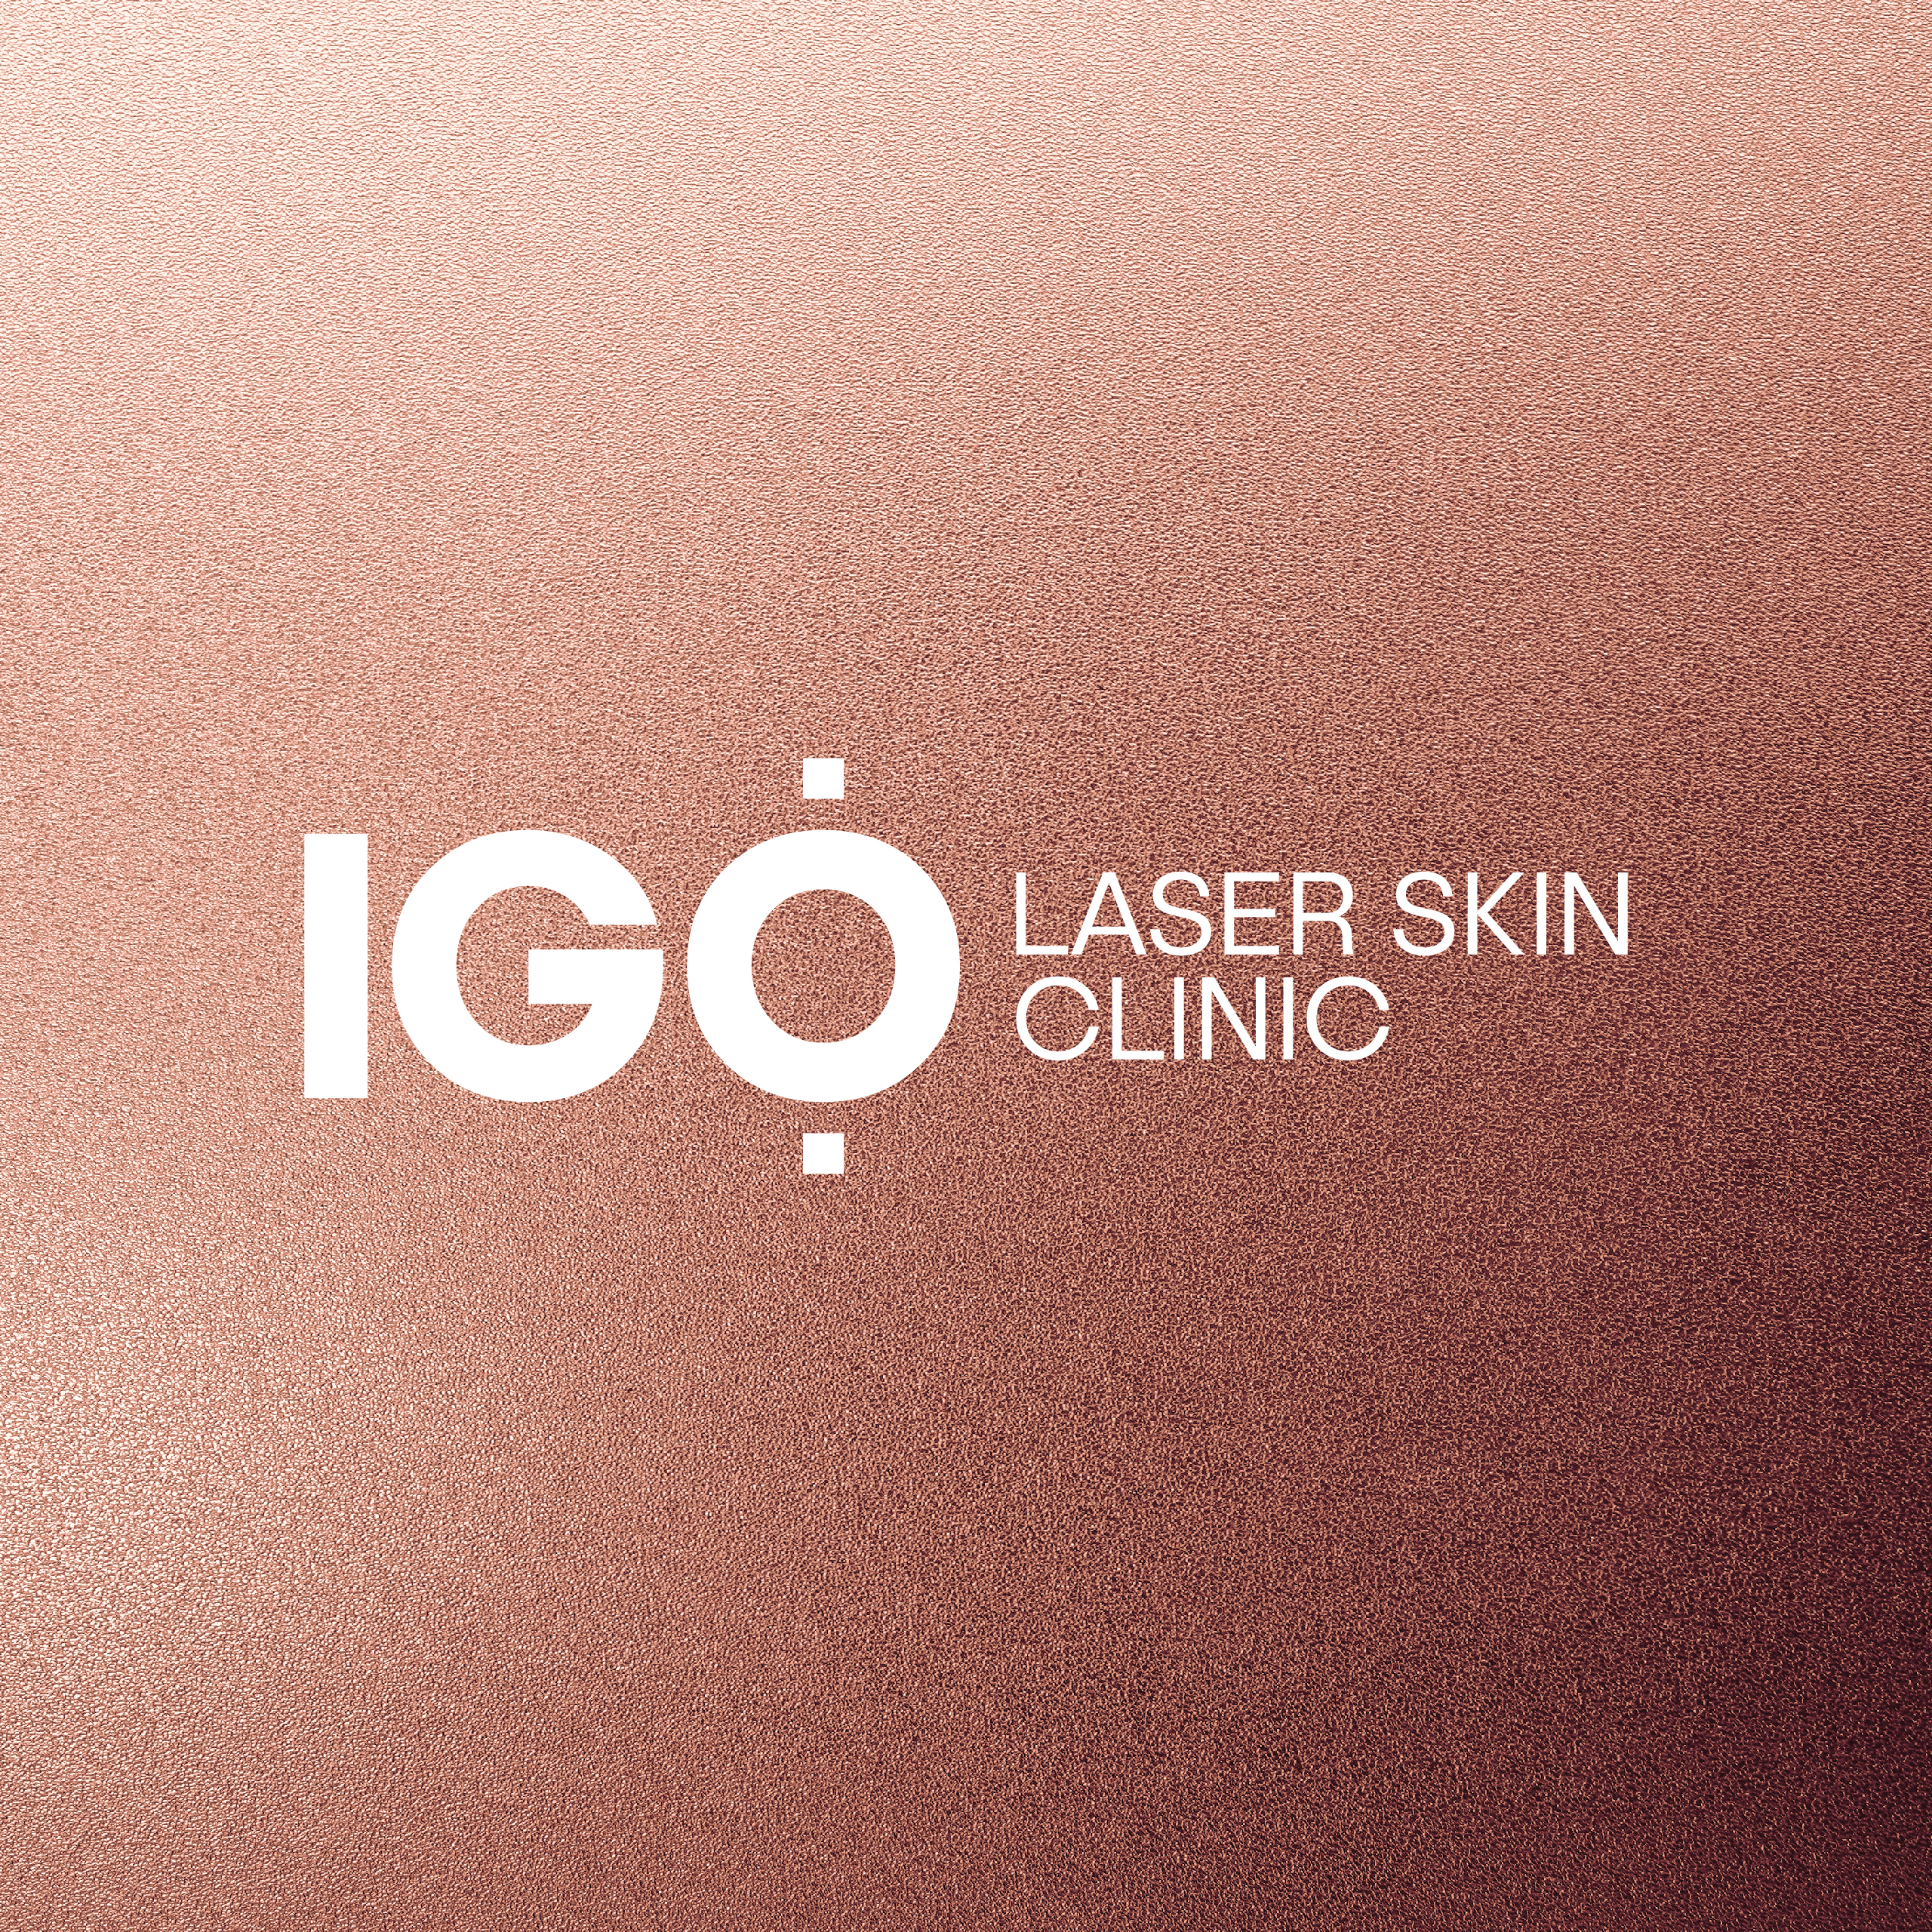 IGO Laser Skin Project Img 19 - Vatra Agency / Founder & CEO Gerton Bejo